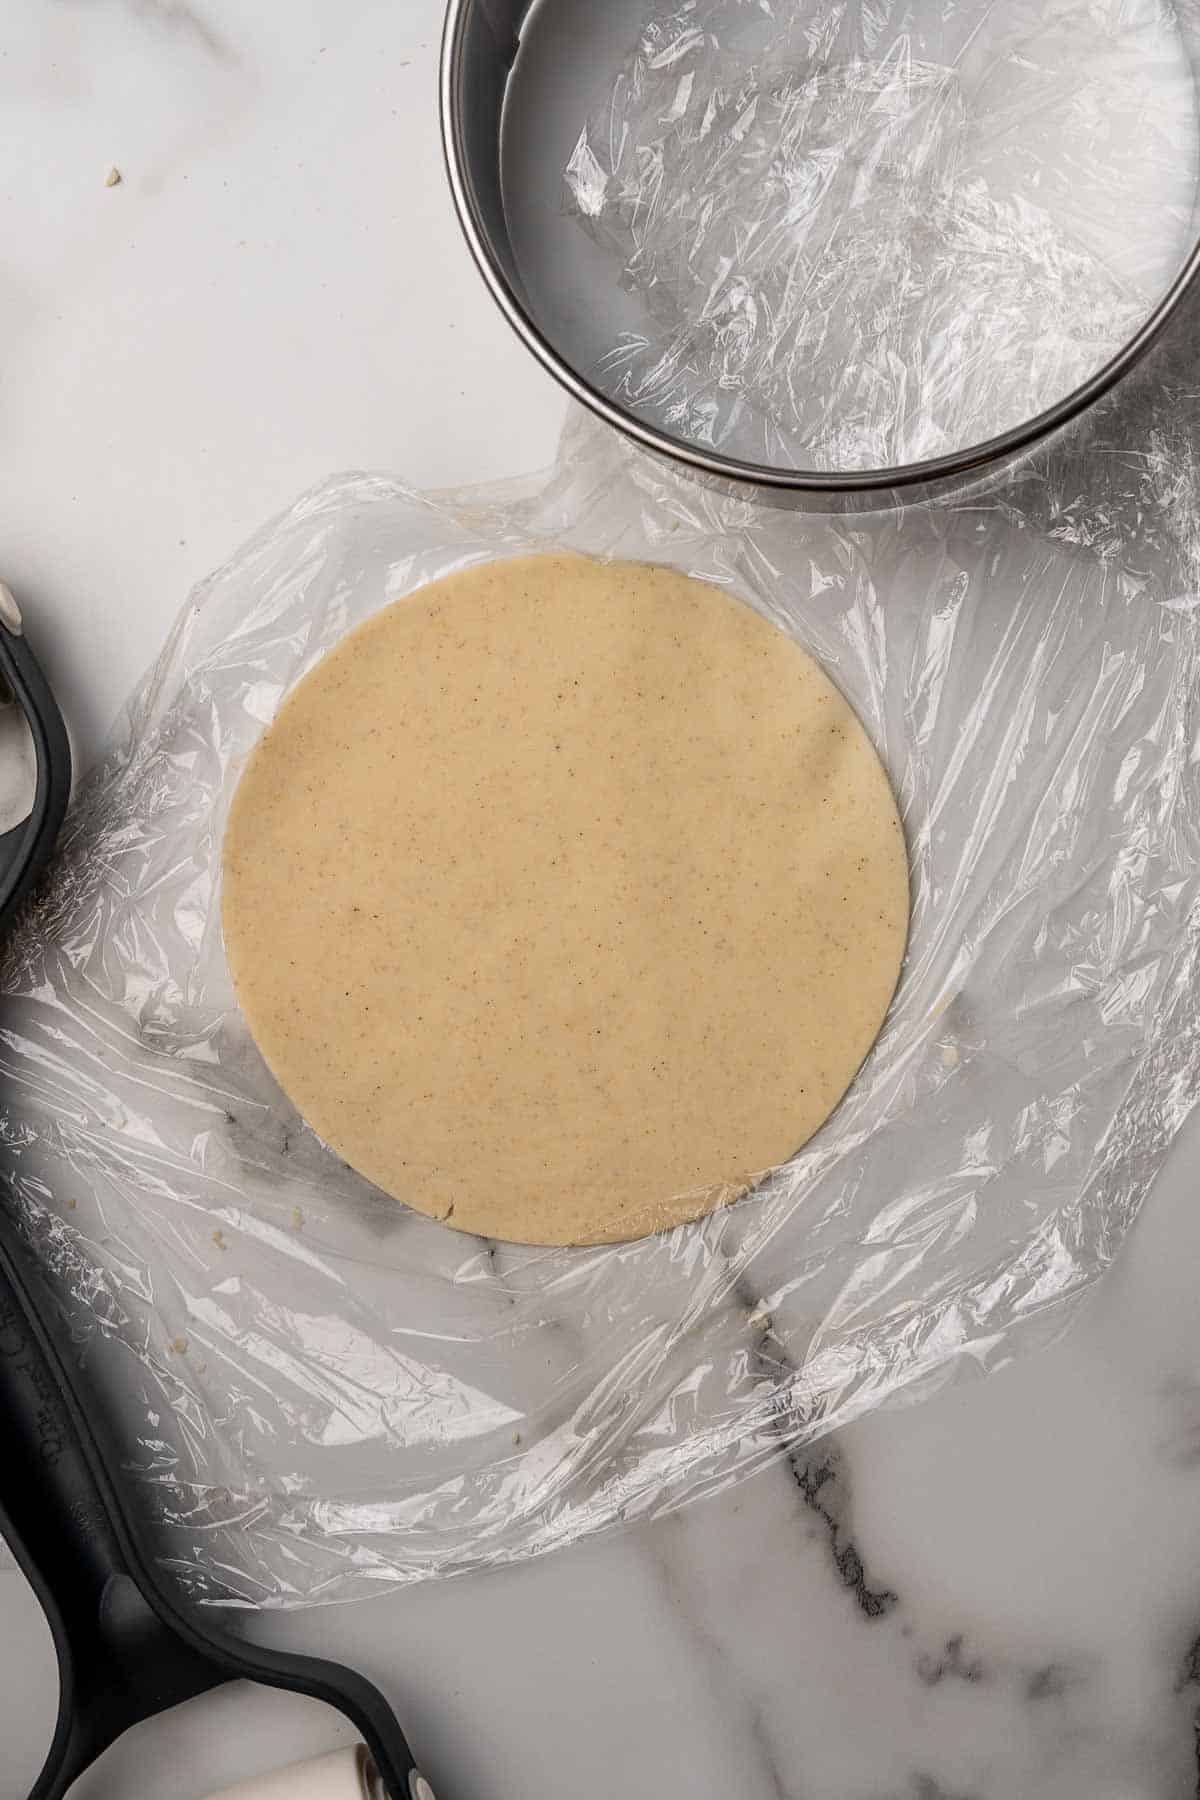 Dough pressed into an 8-inch tortilla